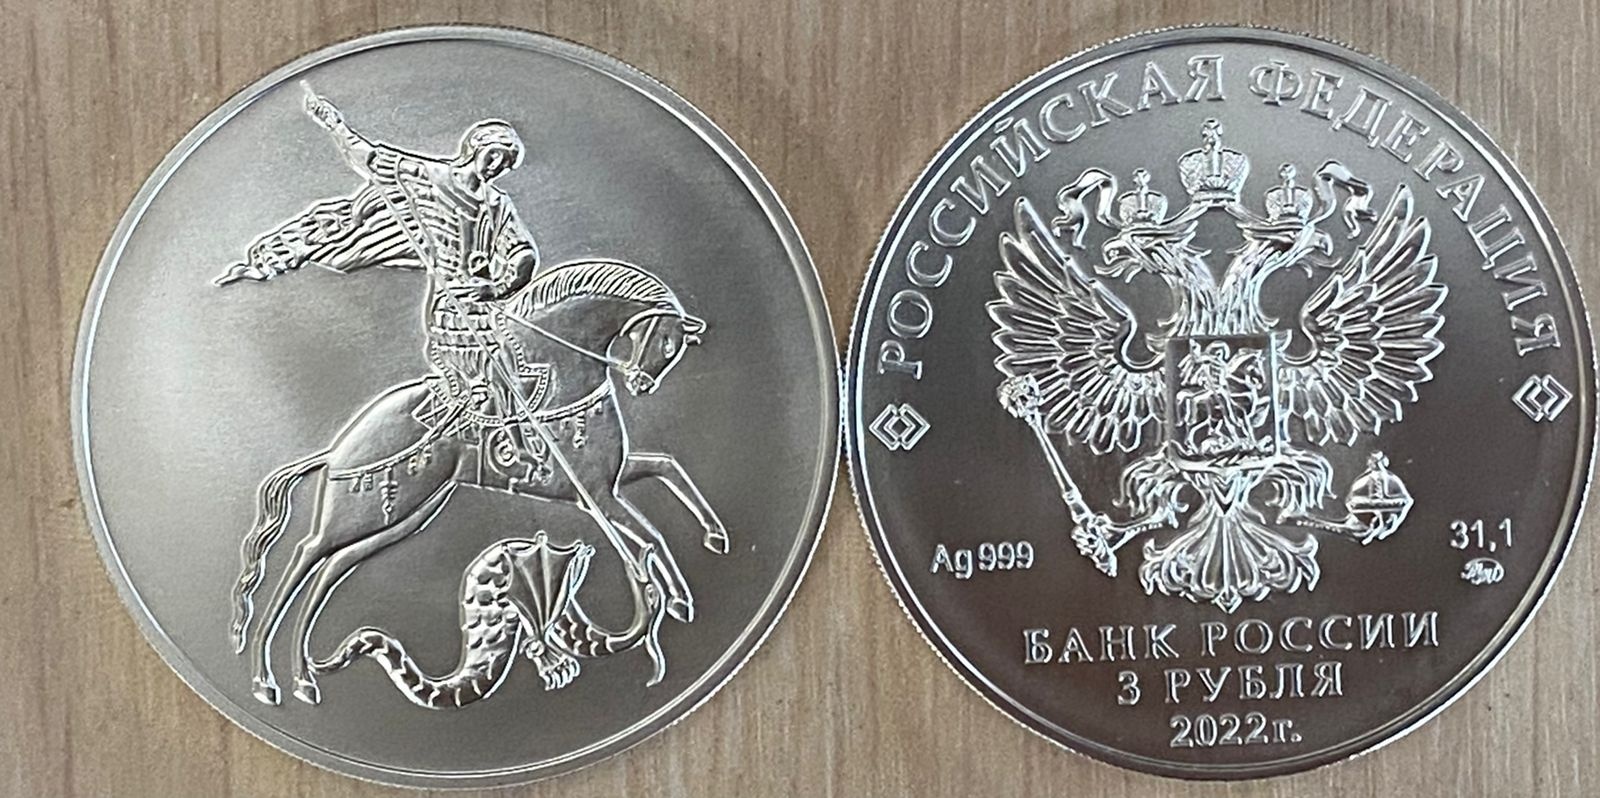 Монета победоносец серебро 3 рубля. Монета Победоносец серебро 2022.